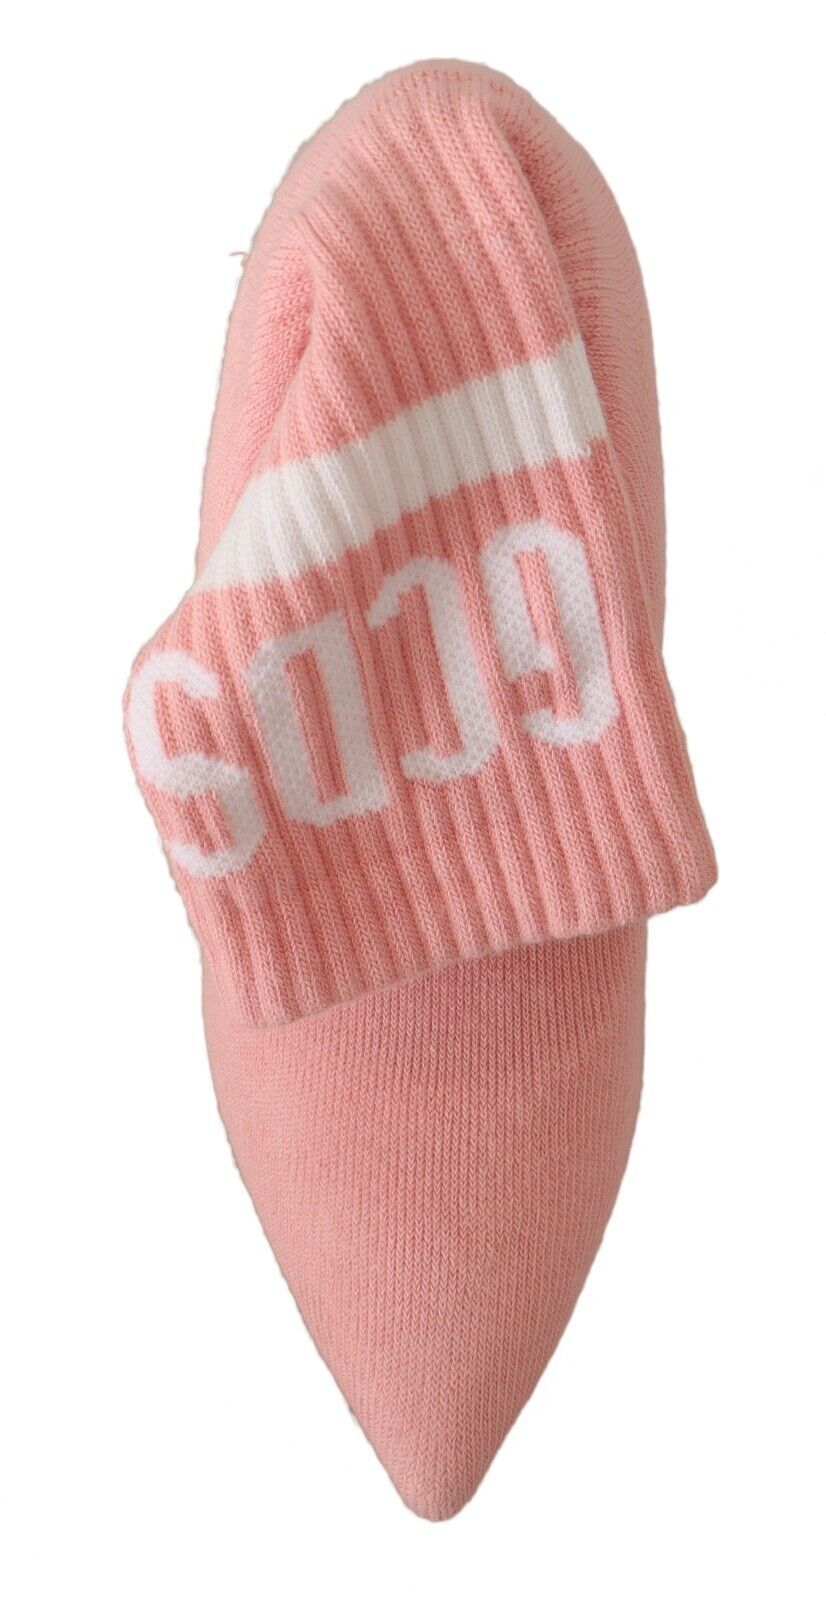 GCDS Pink Suede Logo Socks Block Heel Ankle Boots Shoes